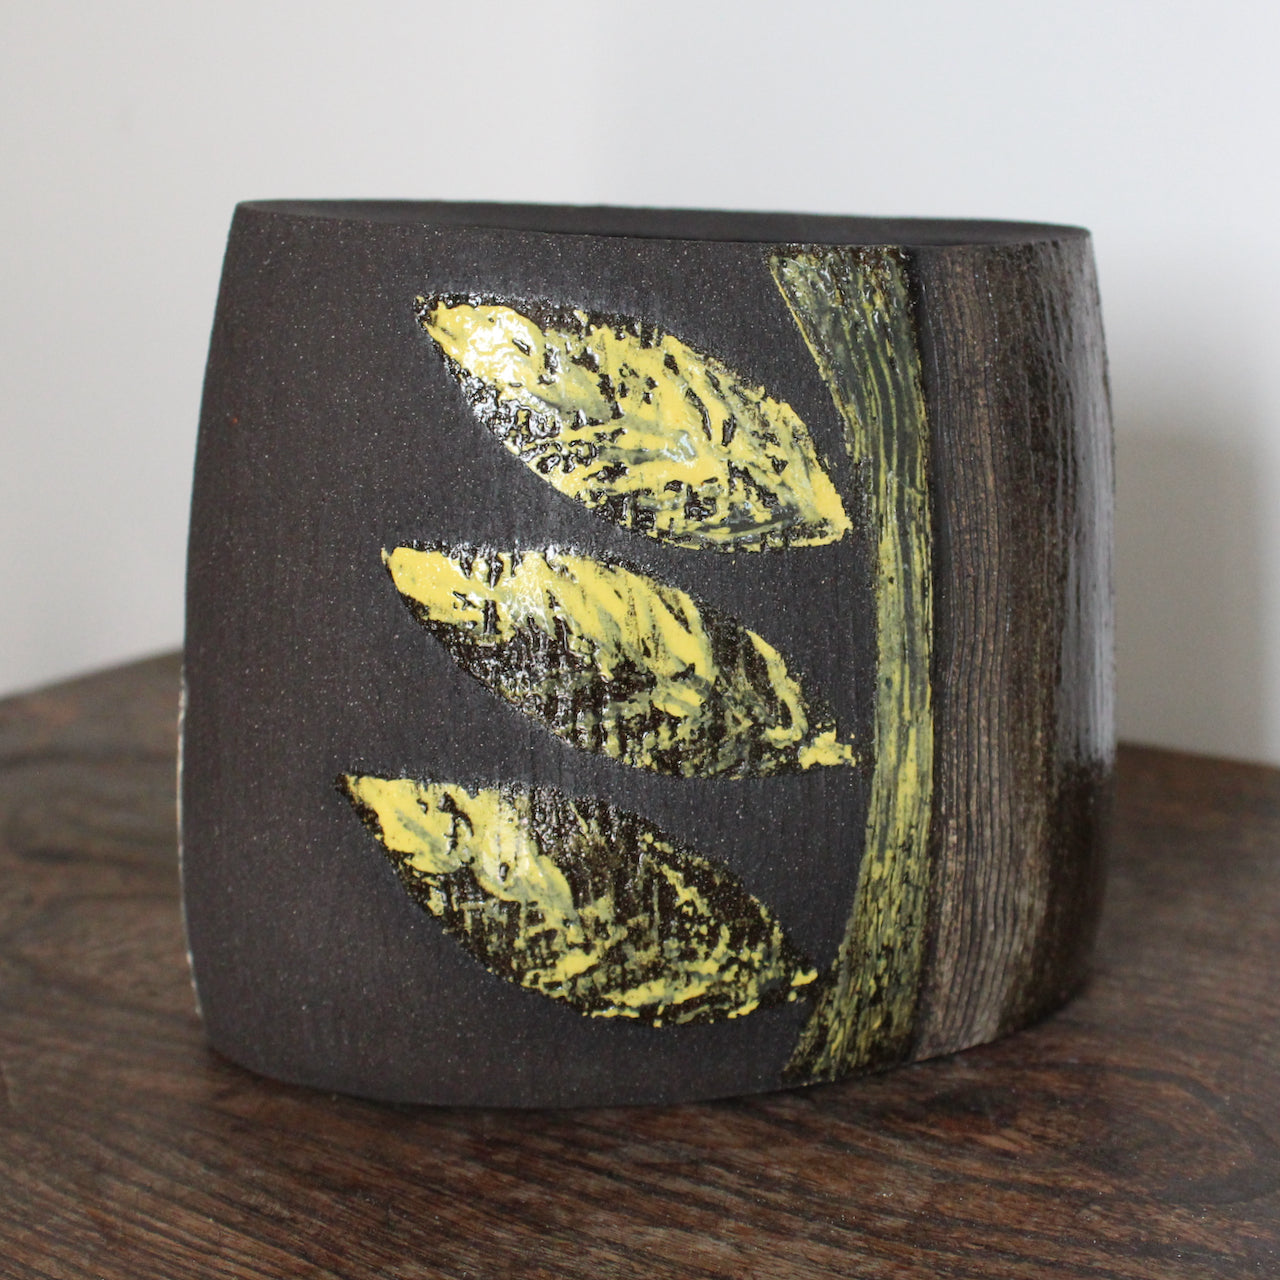 Ceramic vessel with yellow leaf shaped glaze on dark brown clay by Cornish Artist Anthea Bowen